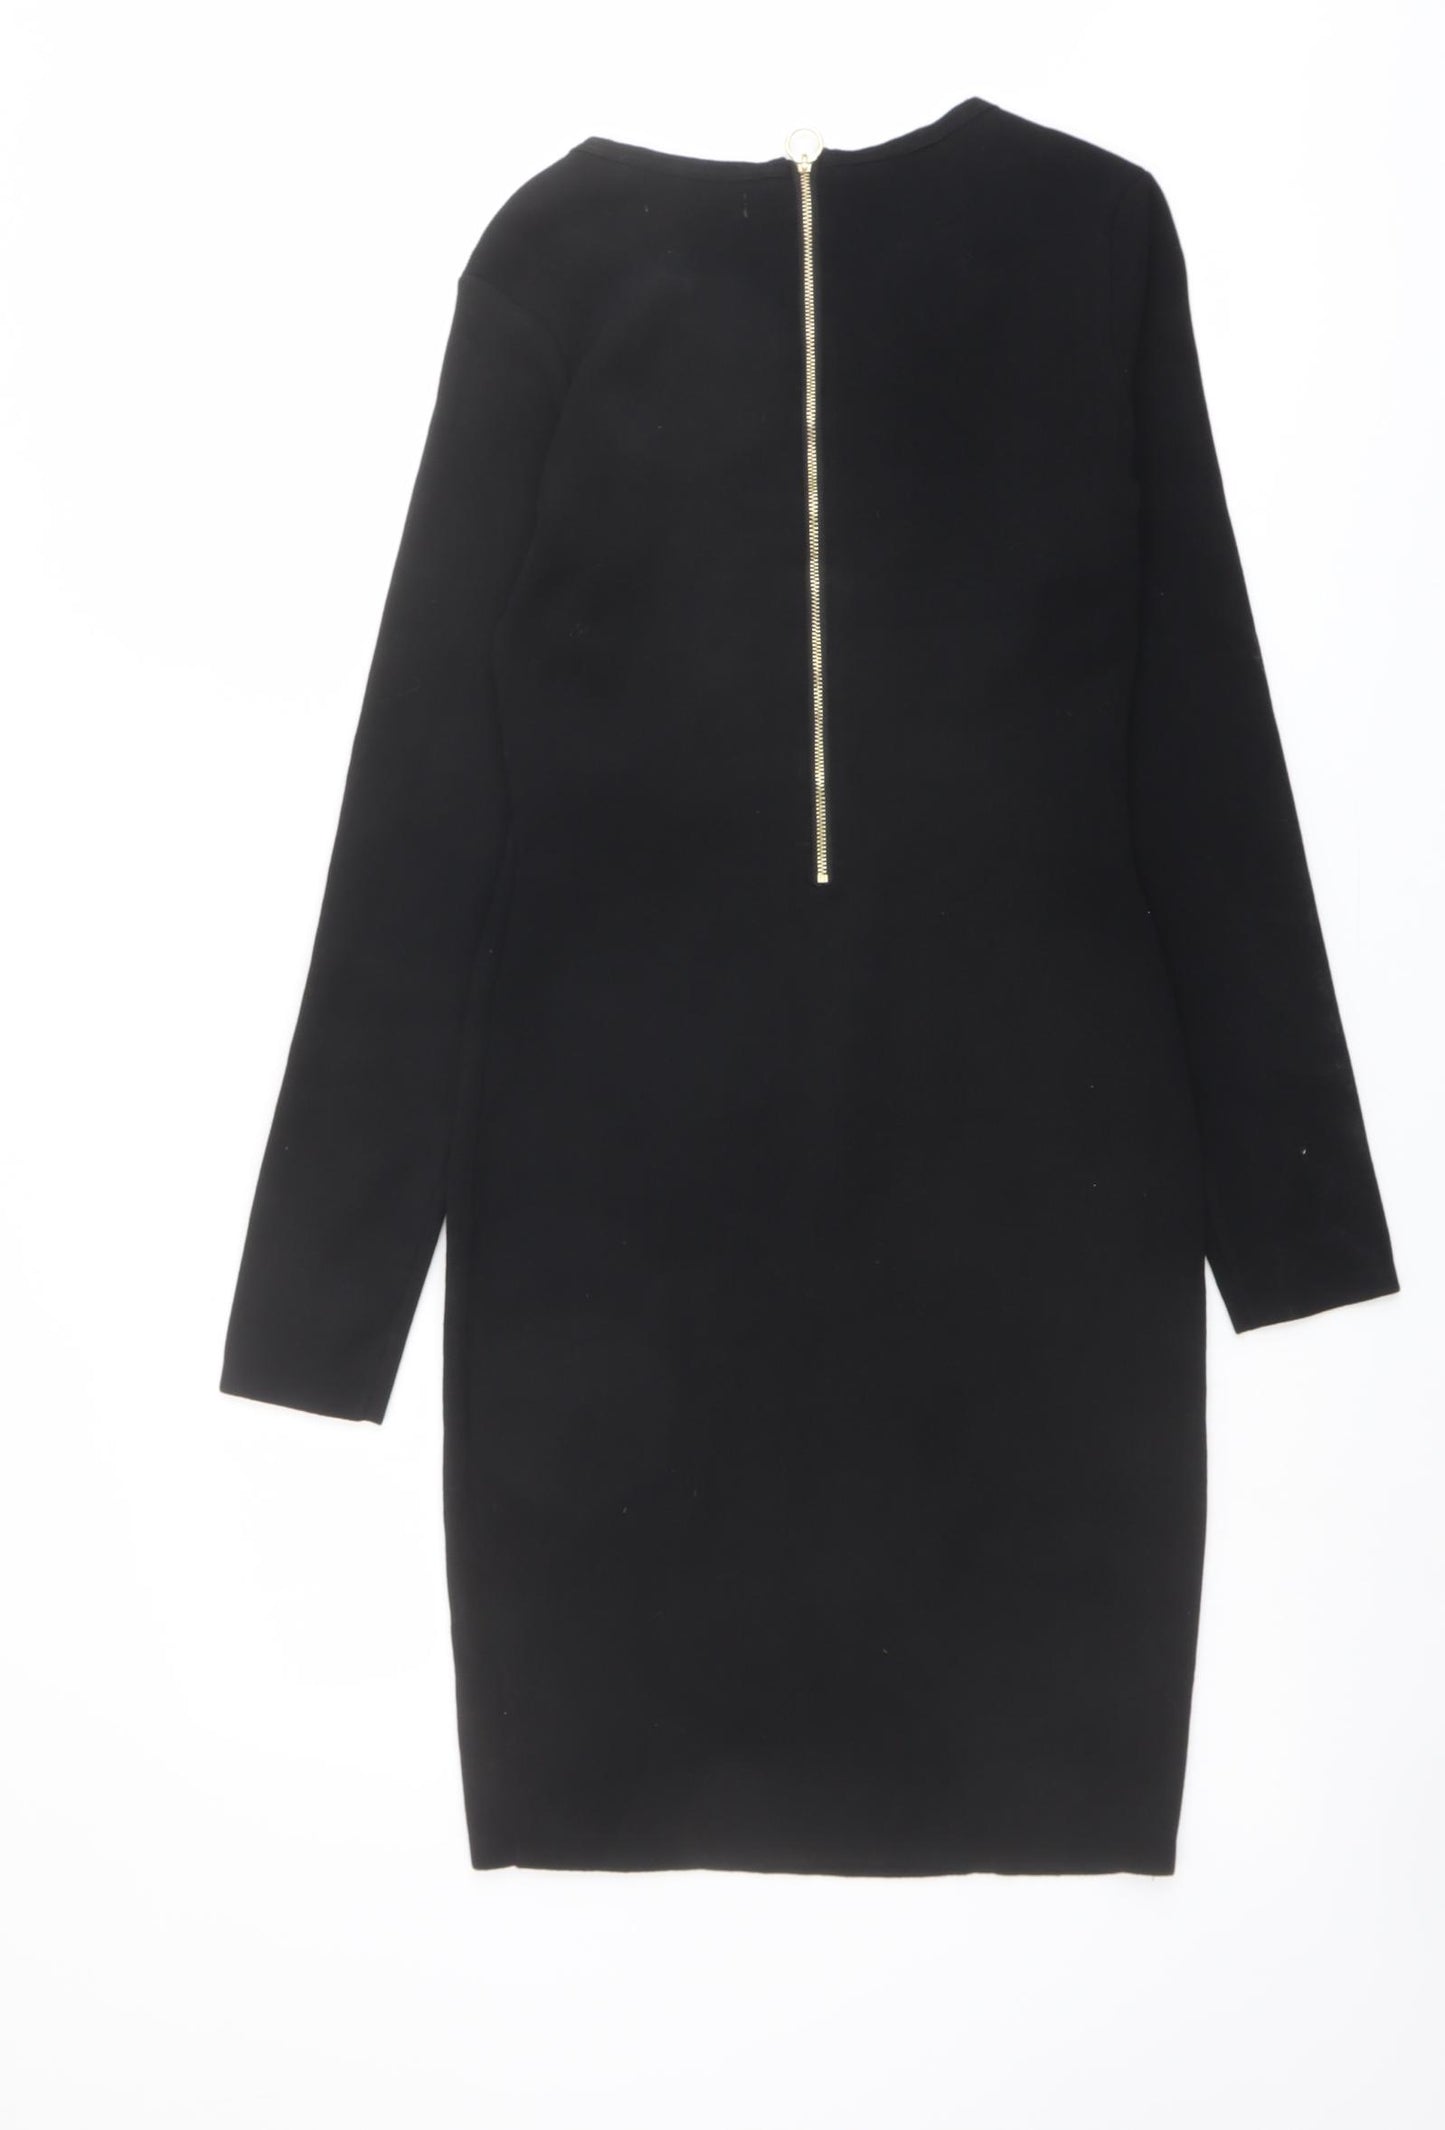 Allyson Womens Black Viscose Pencil Dress Size S V-Neck Zip